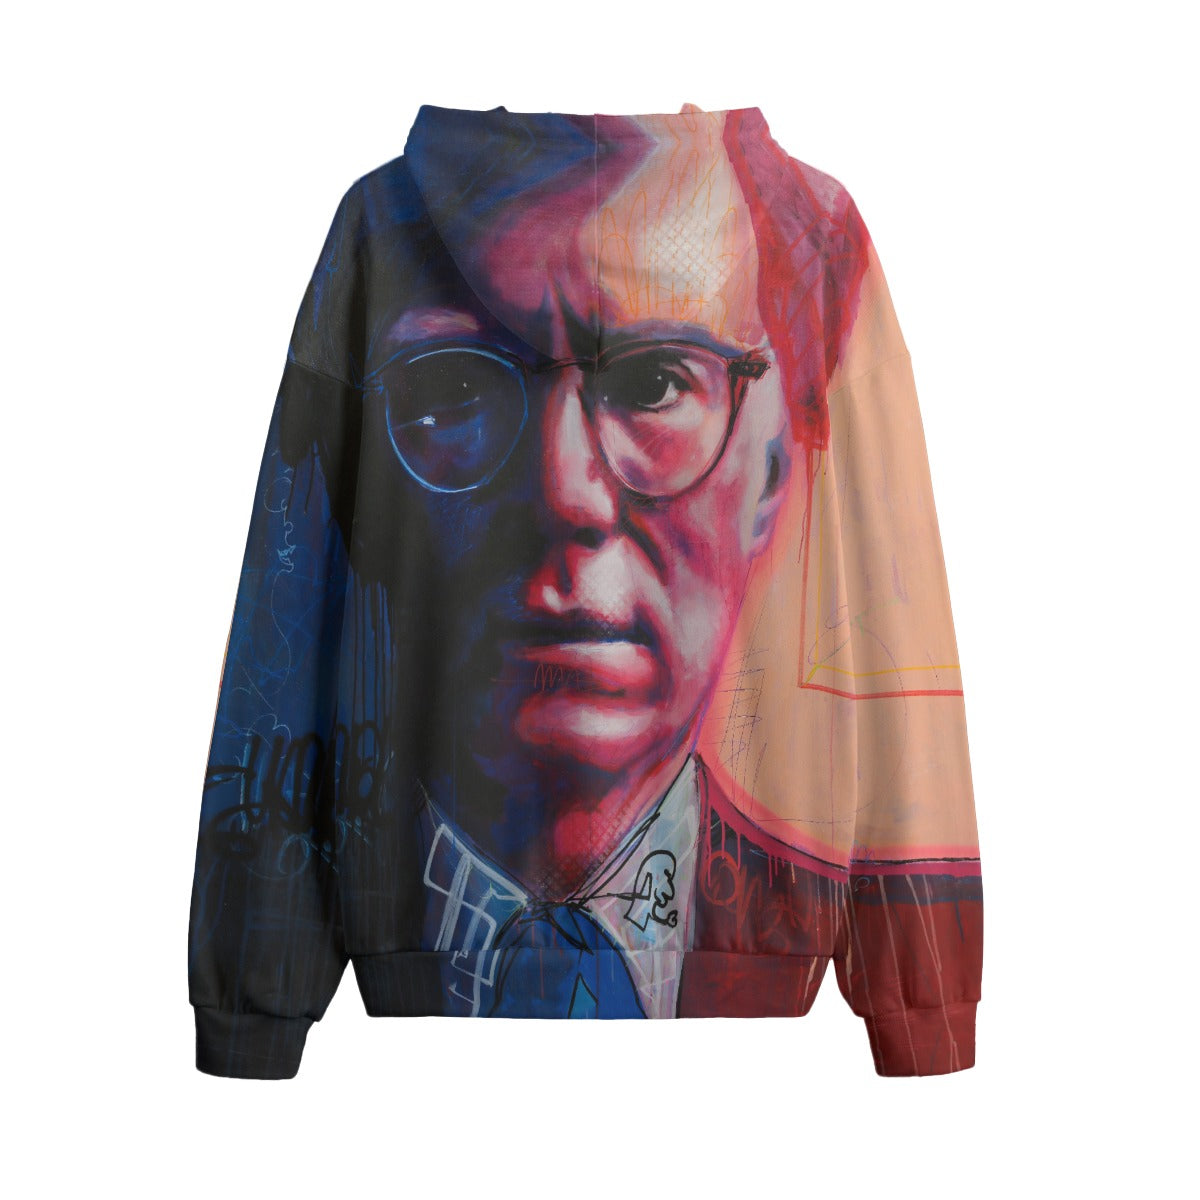 Colorful portrait sweatshirt